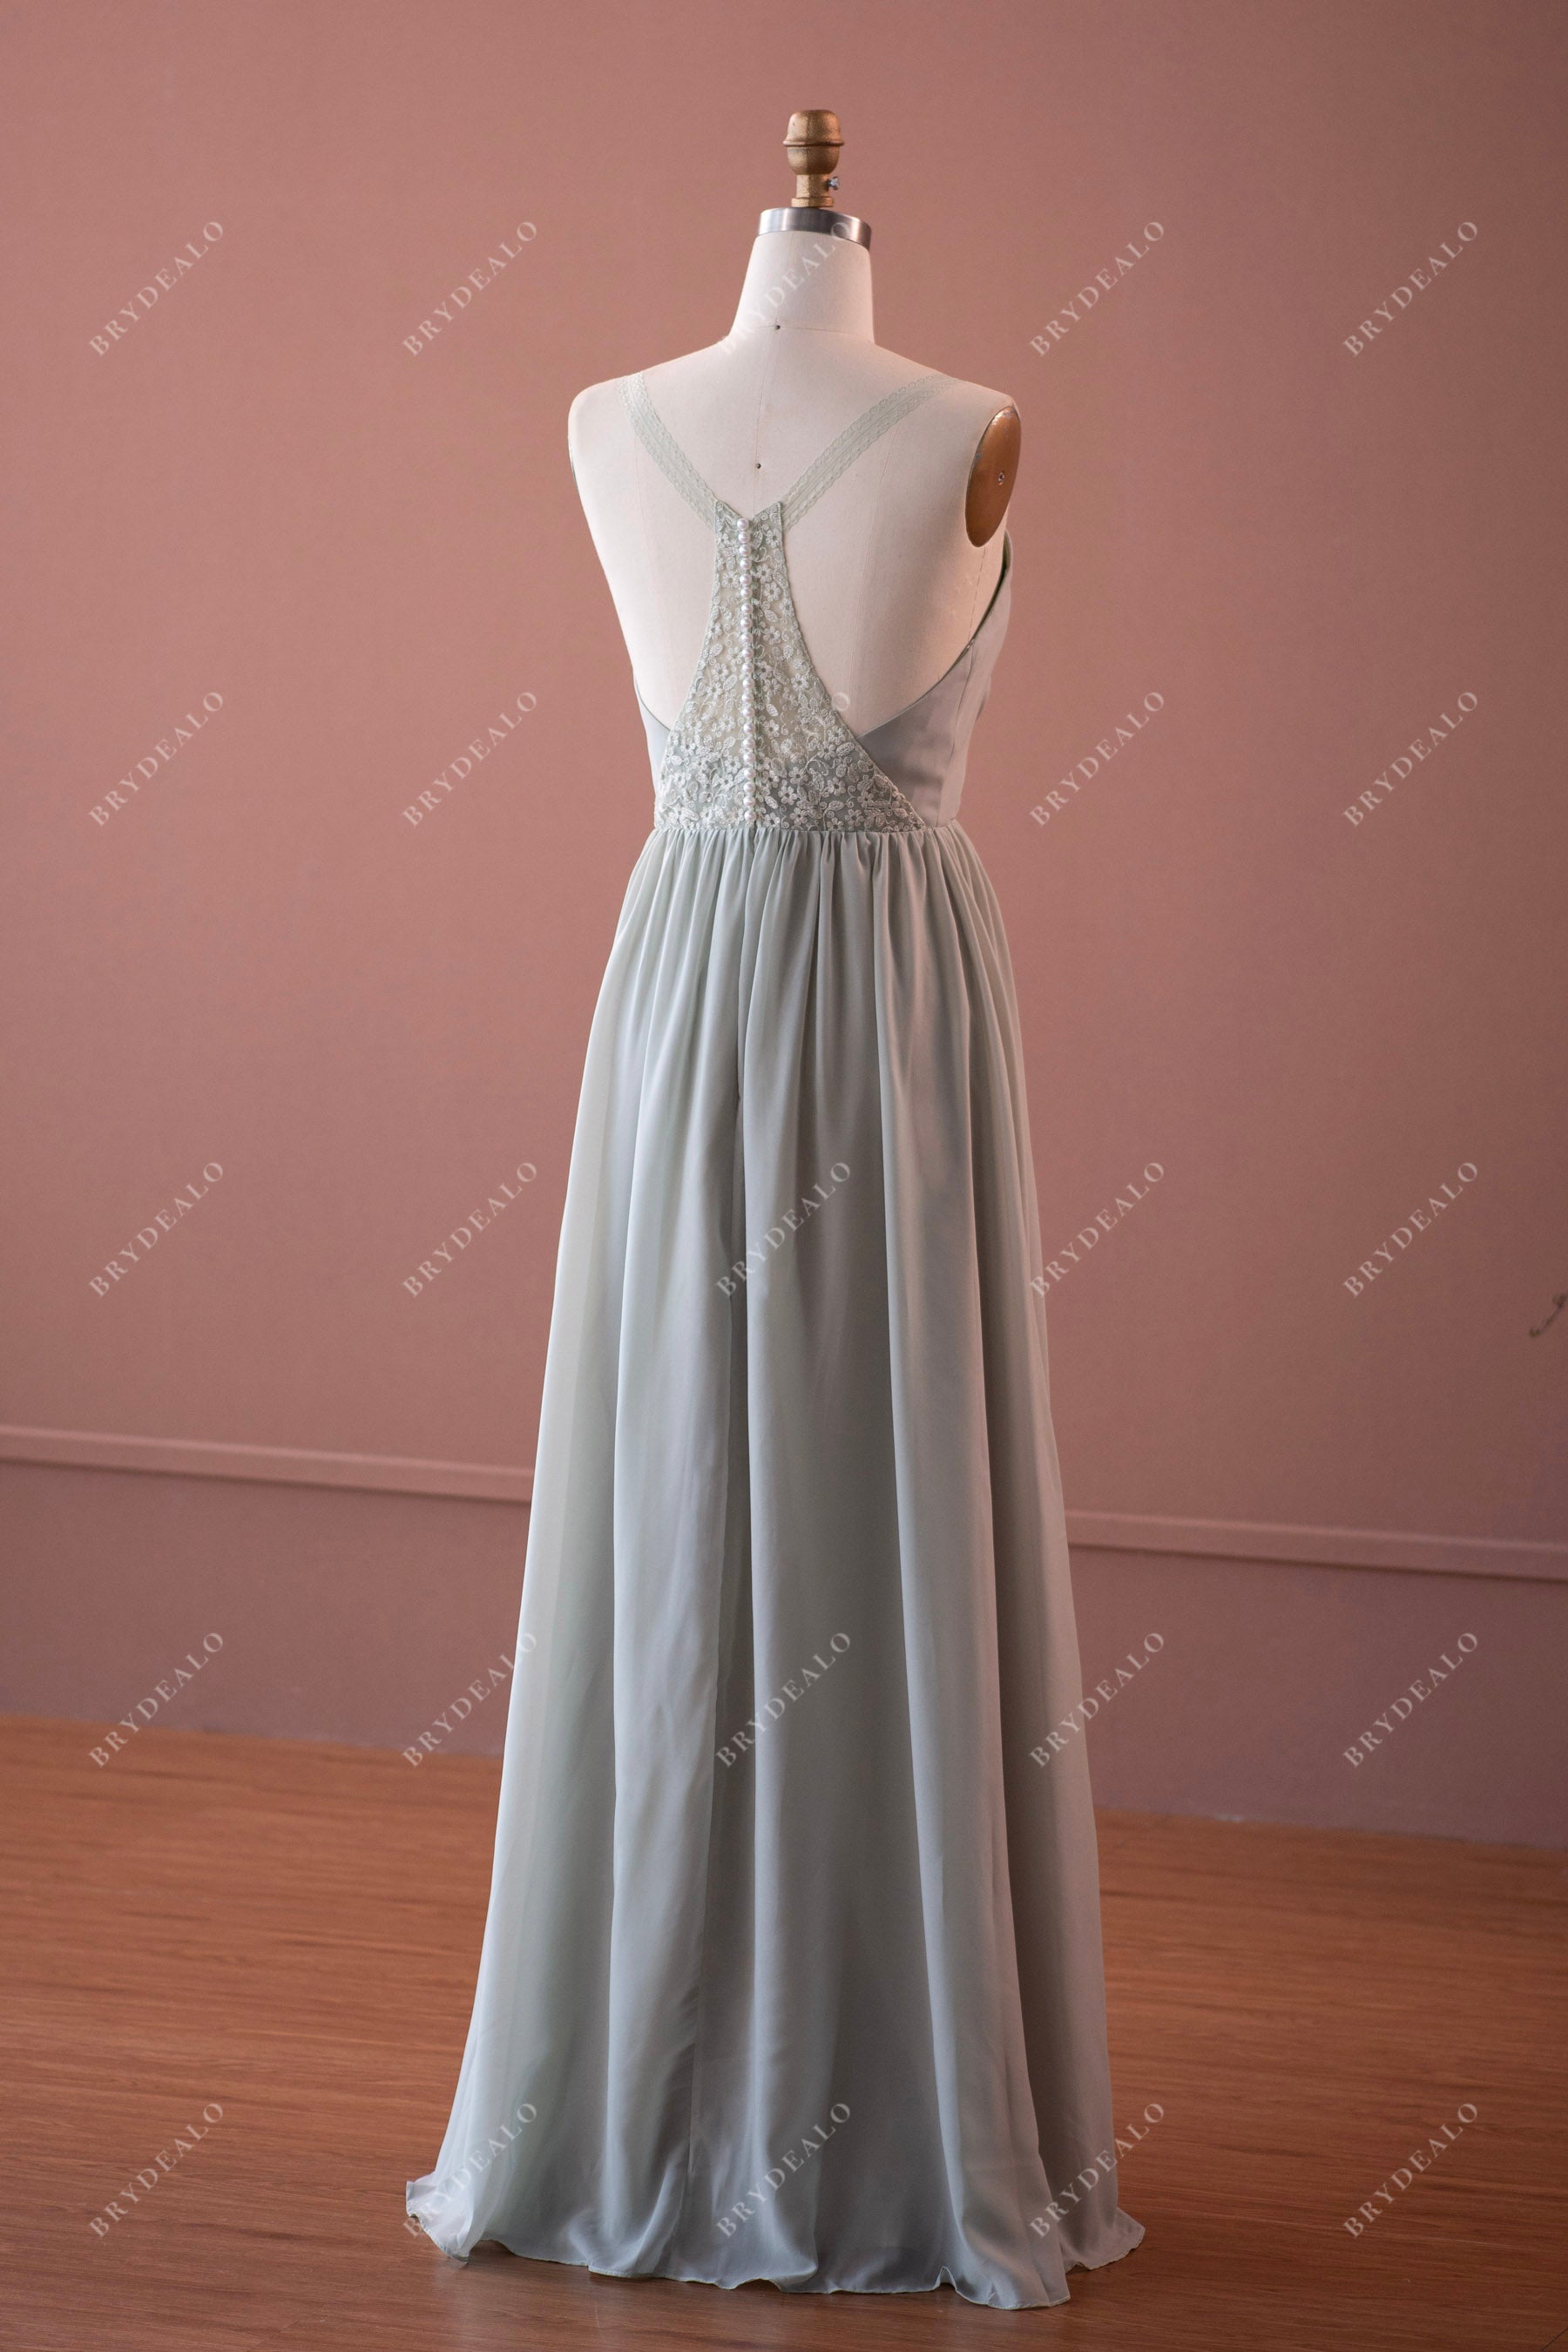 Wholesale Sage Green Lace Pearls Chiffon Bridesmaid Dress